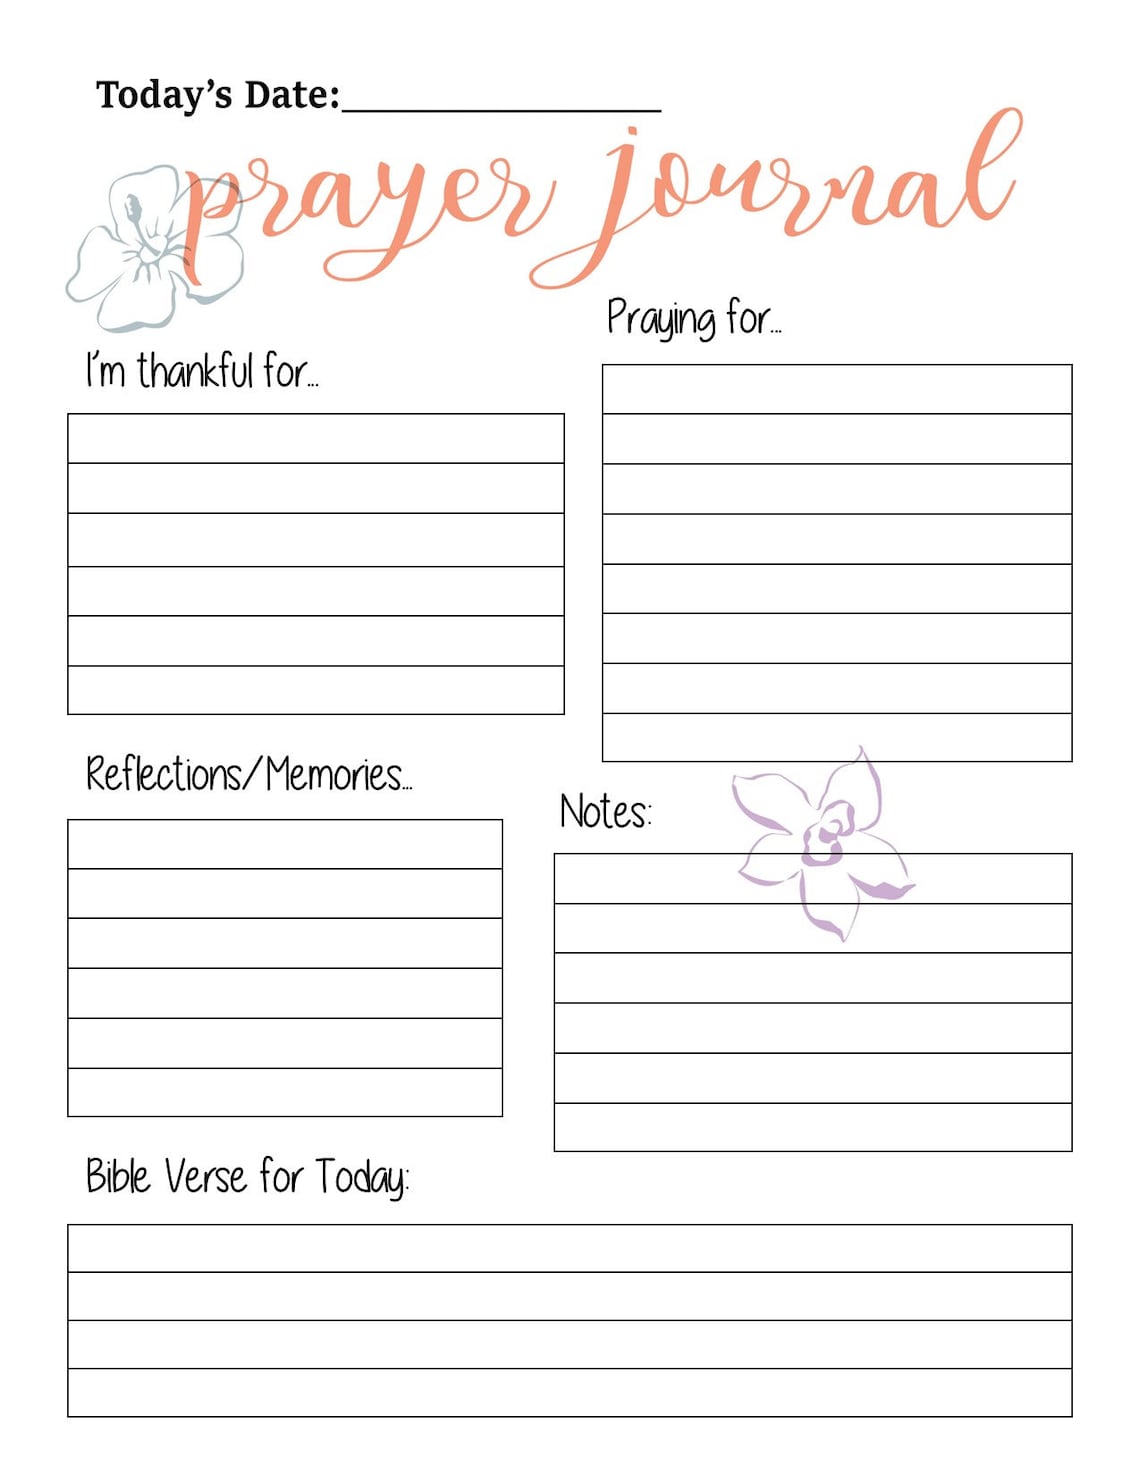 Prayer Journal Simple, Printable Bundle digital Download - Etsy